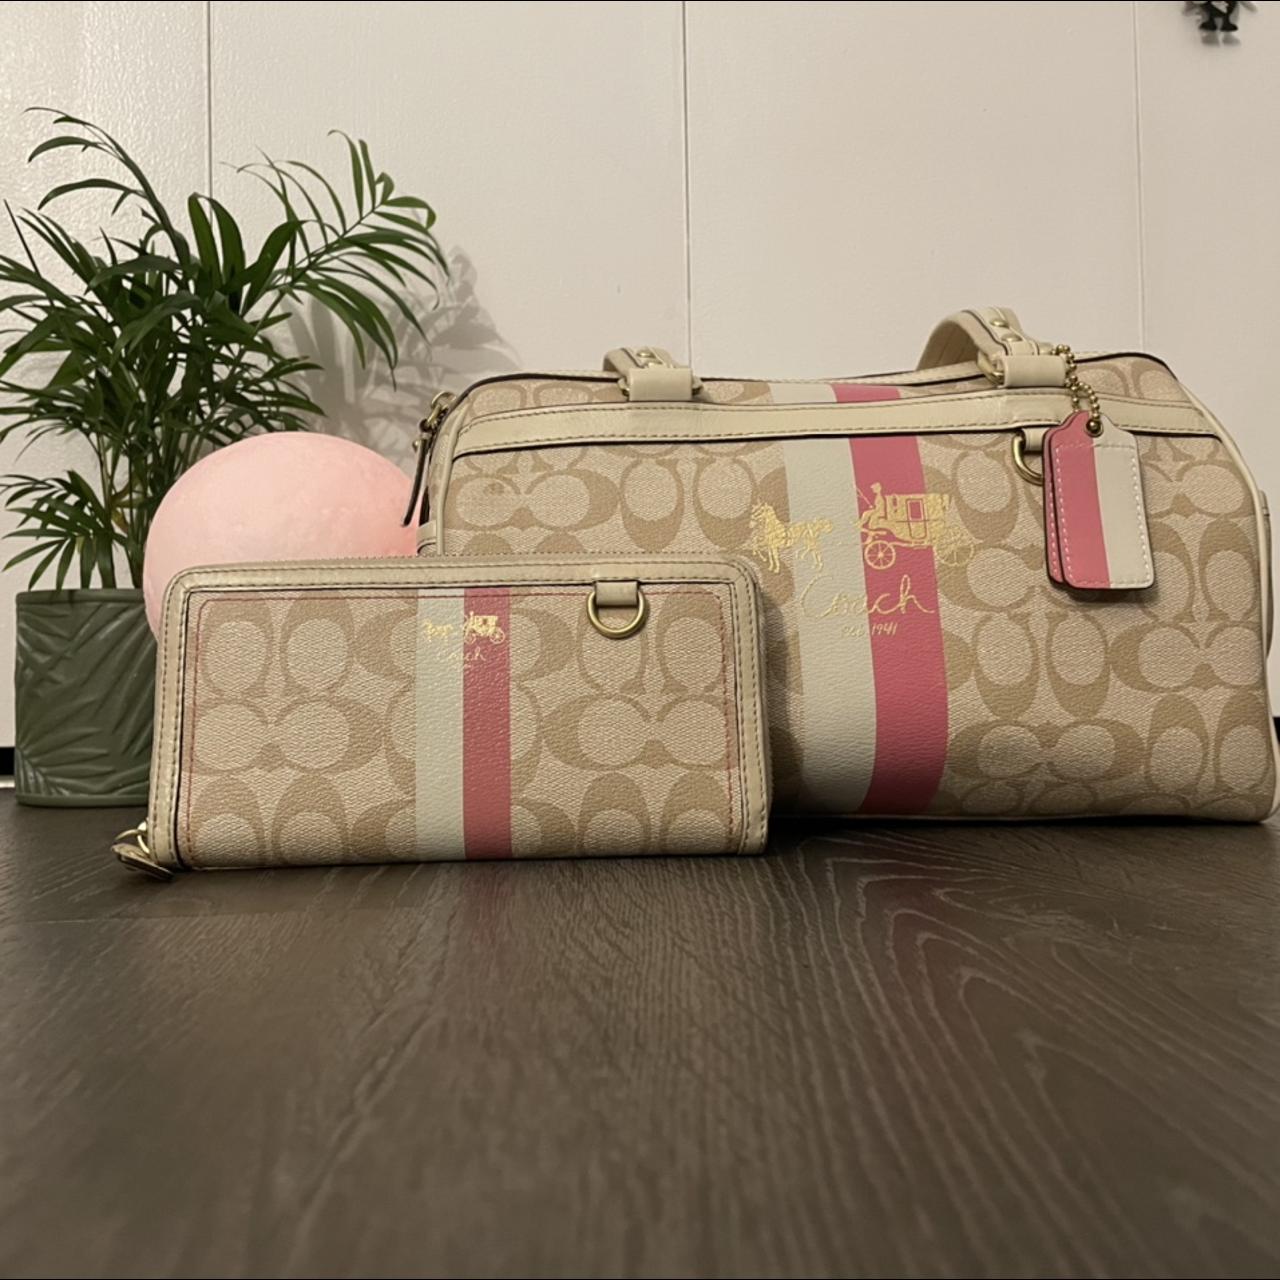 Coach Heritage Cream & Pink Stripe Satchel Handbag